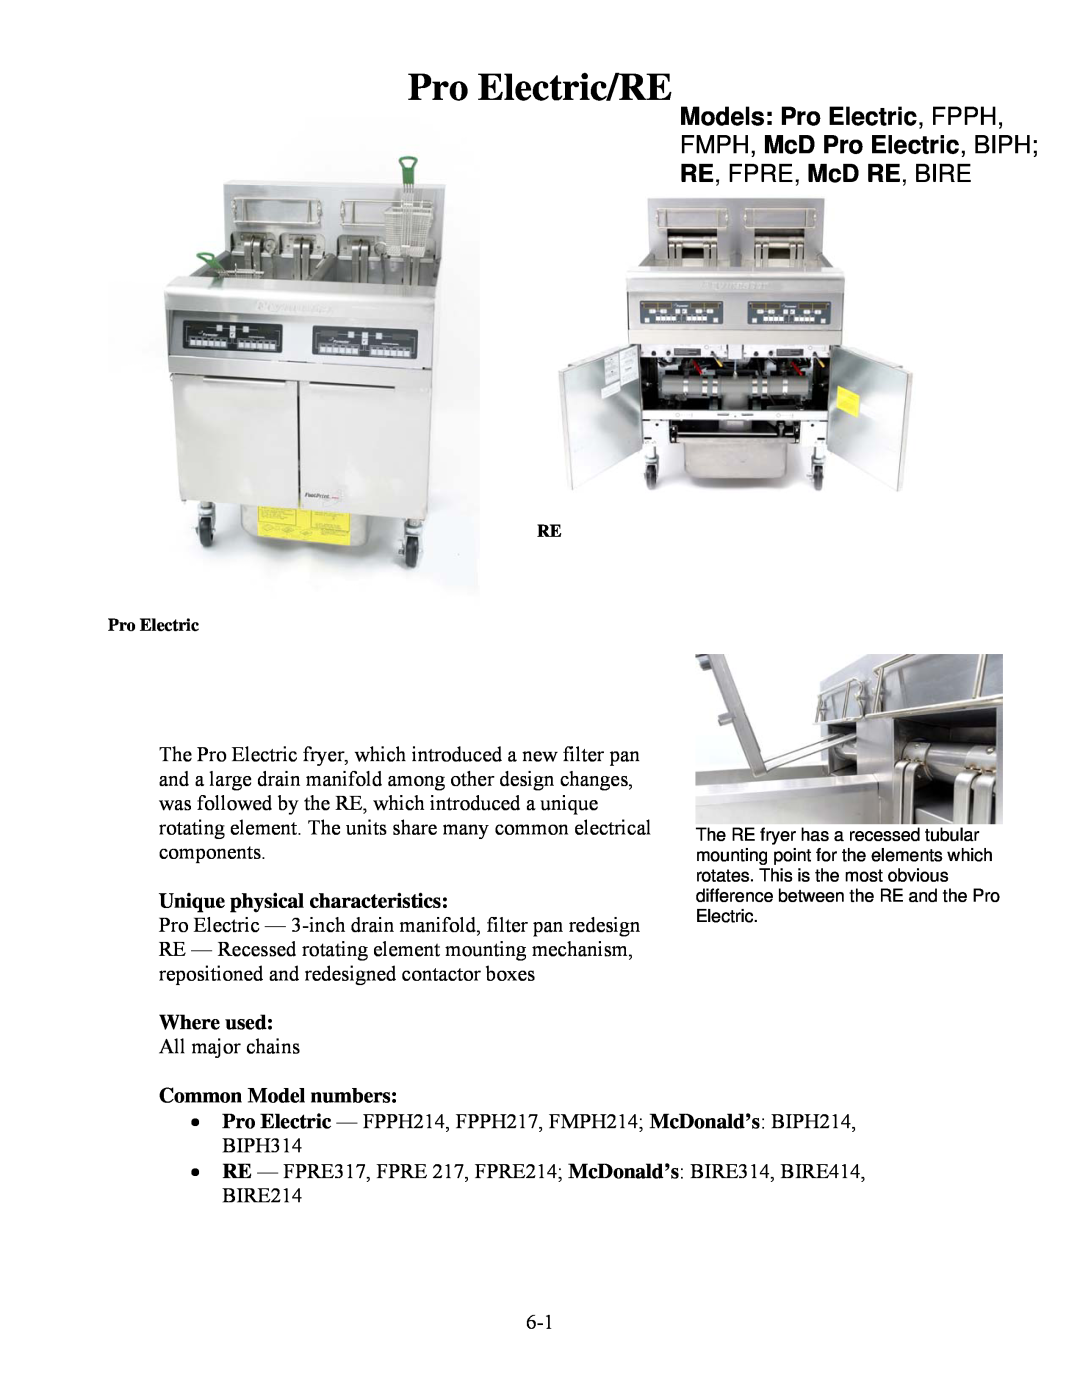 Frymaster 8196321 manual Pro Electric/RE, Models Pro Electric, FPPH, FMPH, McD Pro Electric, BIPH, RE, FPRE, McD RE, BIRE 